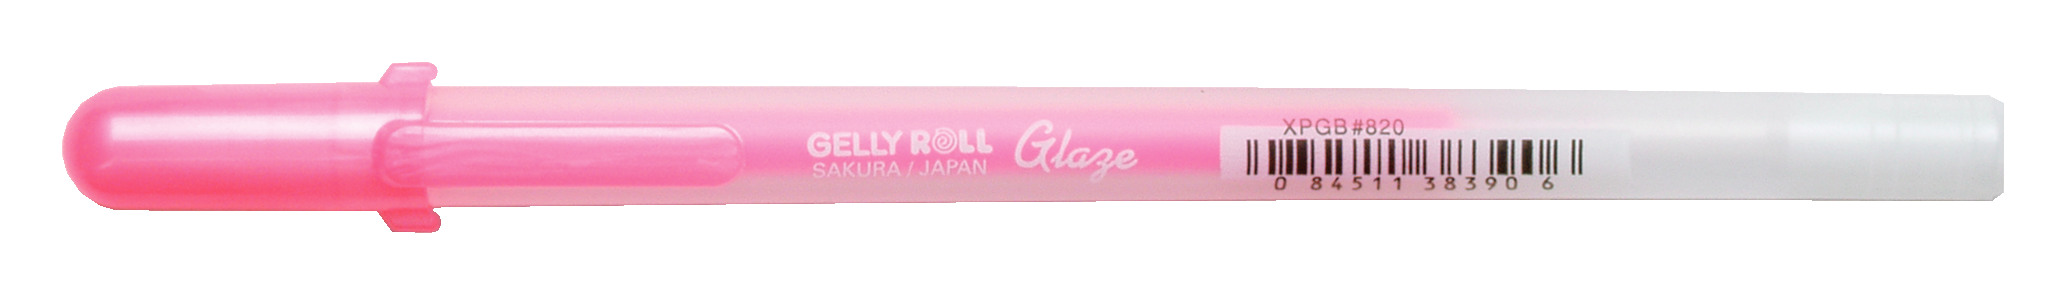 SAKURA Gelly Roll 0.7mm XPGB820 Glaze Pink